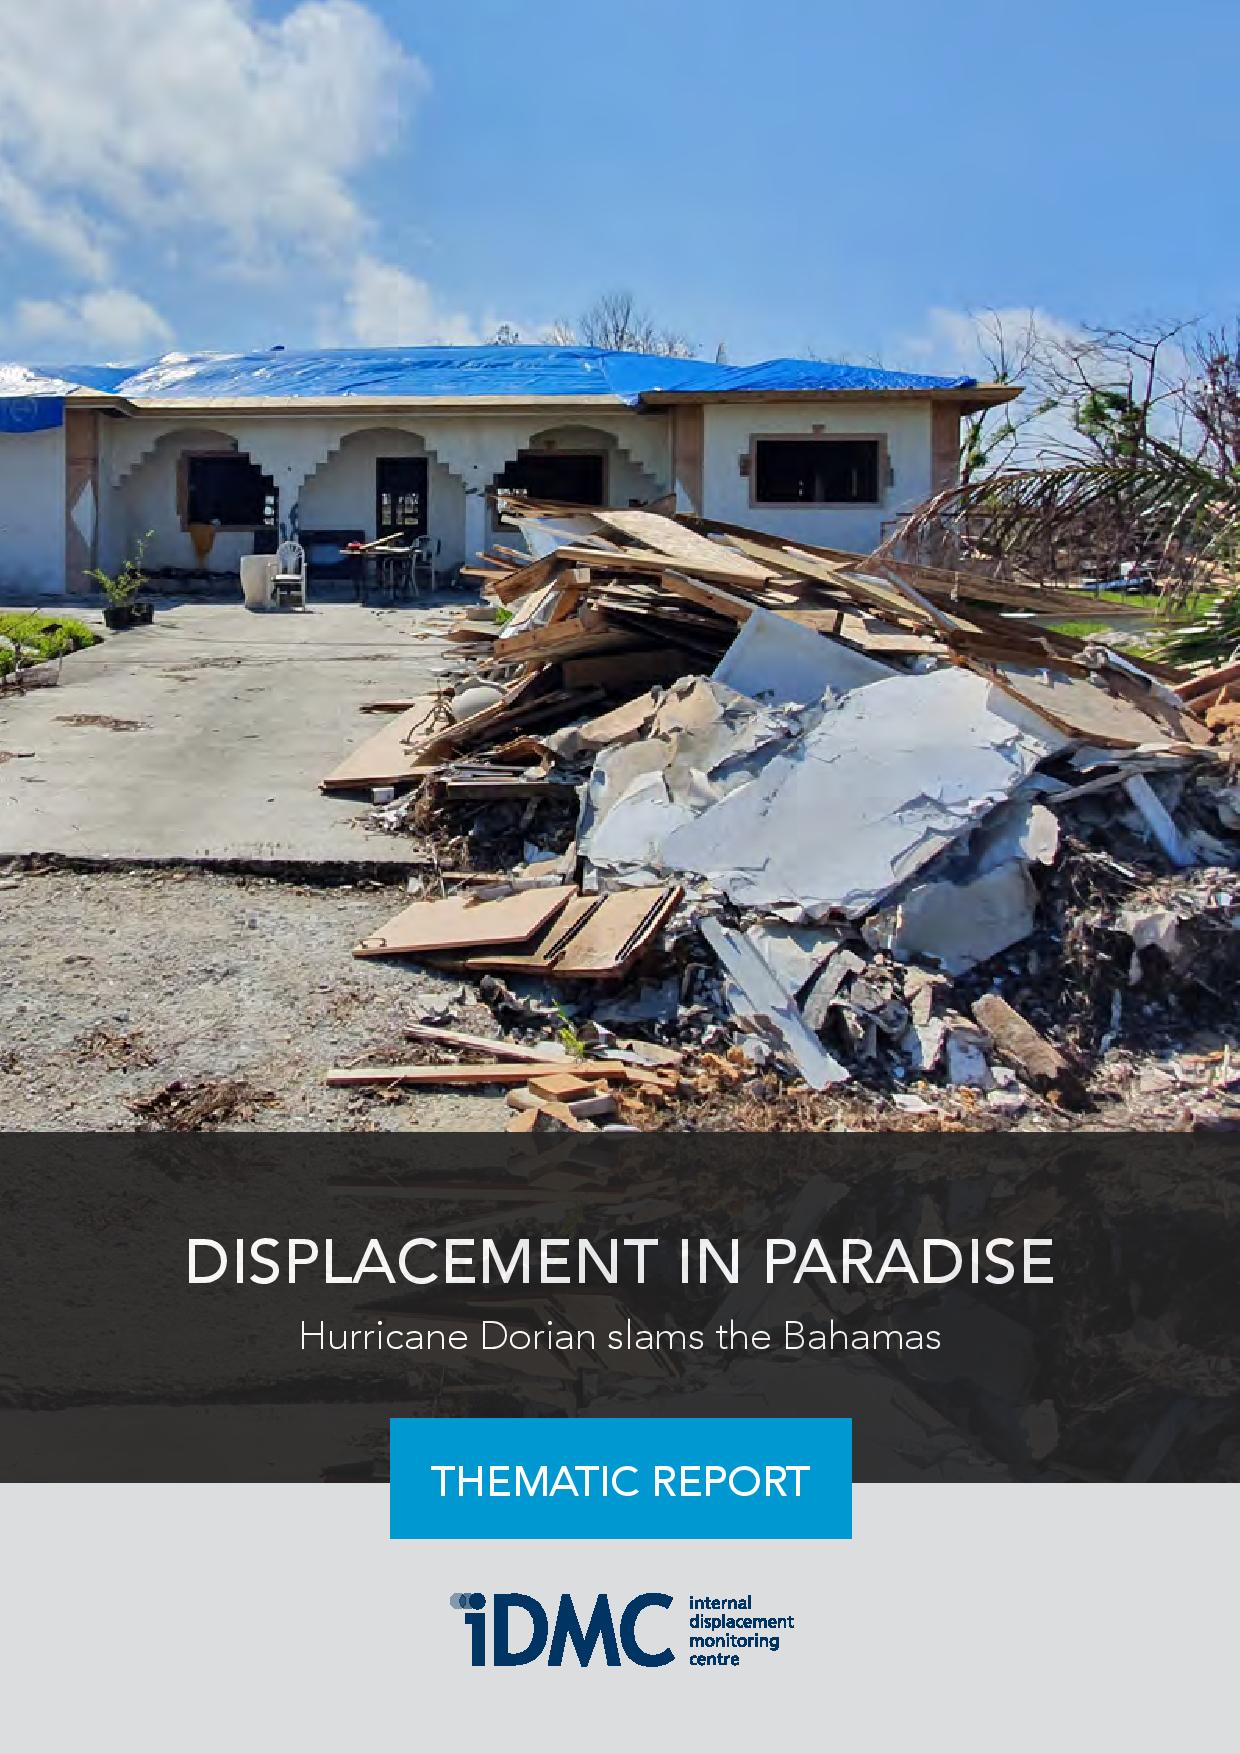 Displacement in paradise: Hurricane Dorian slams the Bahamas